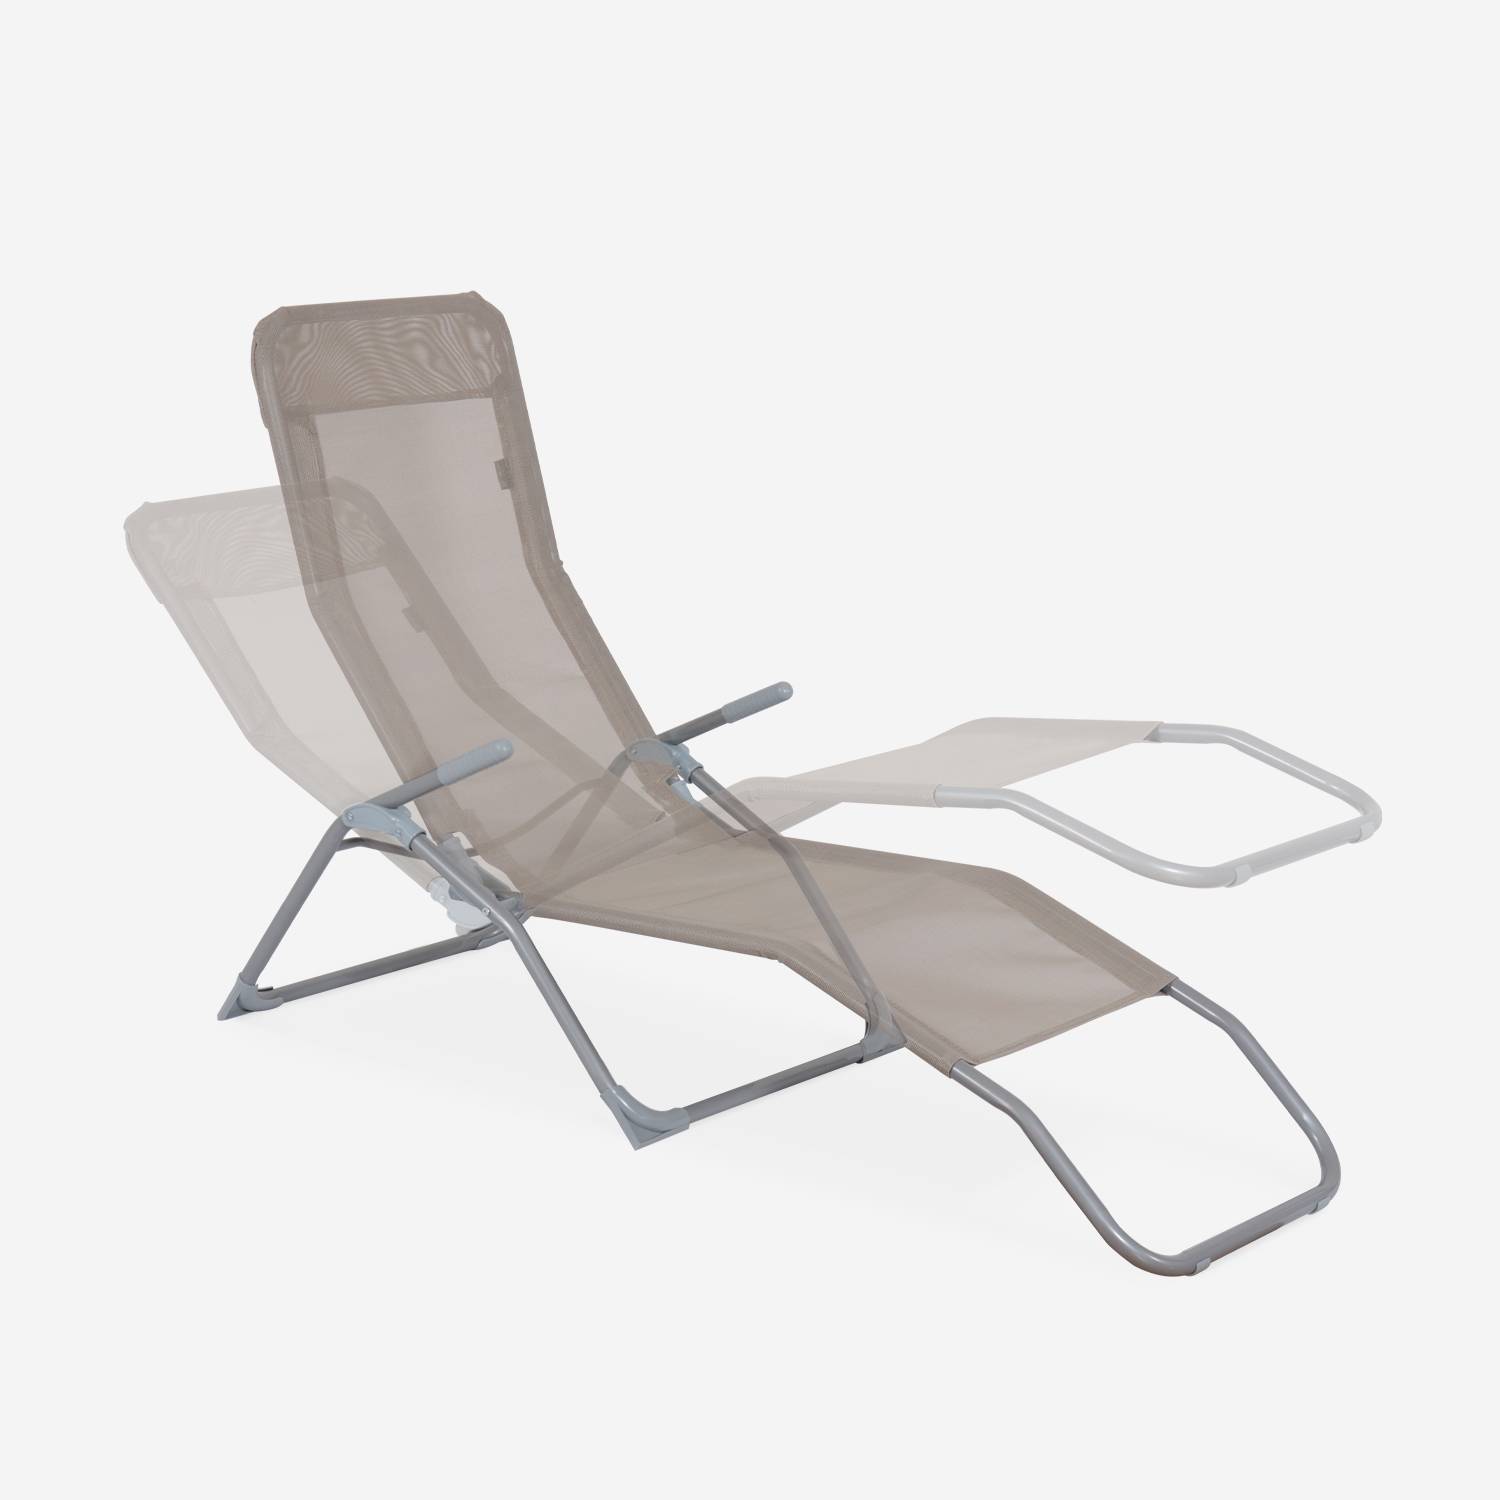 Set van 4 opvouwbare ligstoelen - Levito Taupe - Ligstoelen van textileen, 2 posities, opvouwbare ligstoelen Photo5